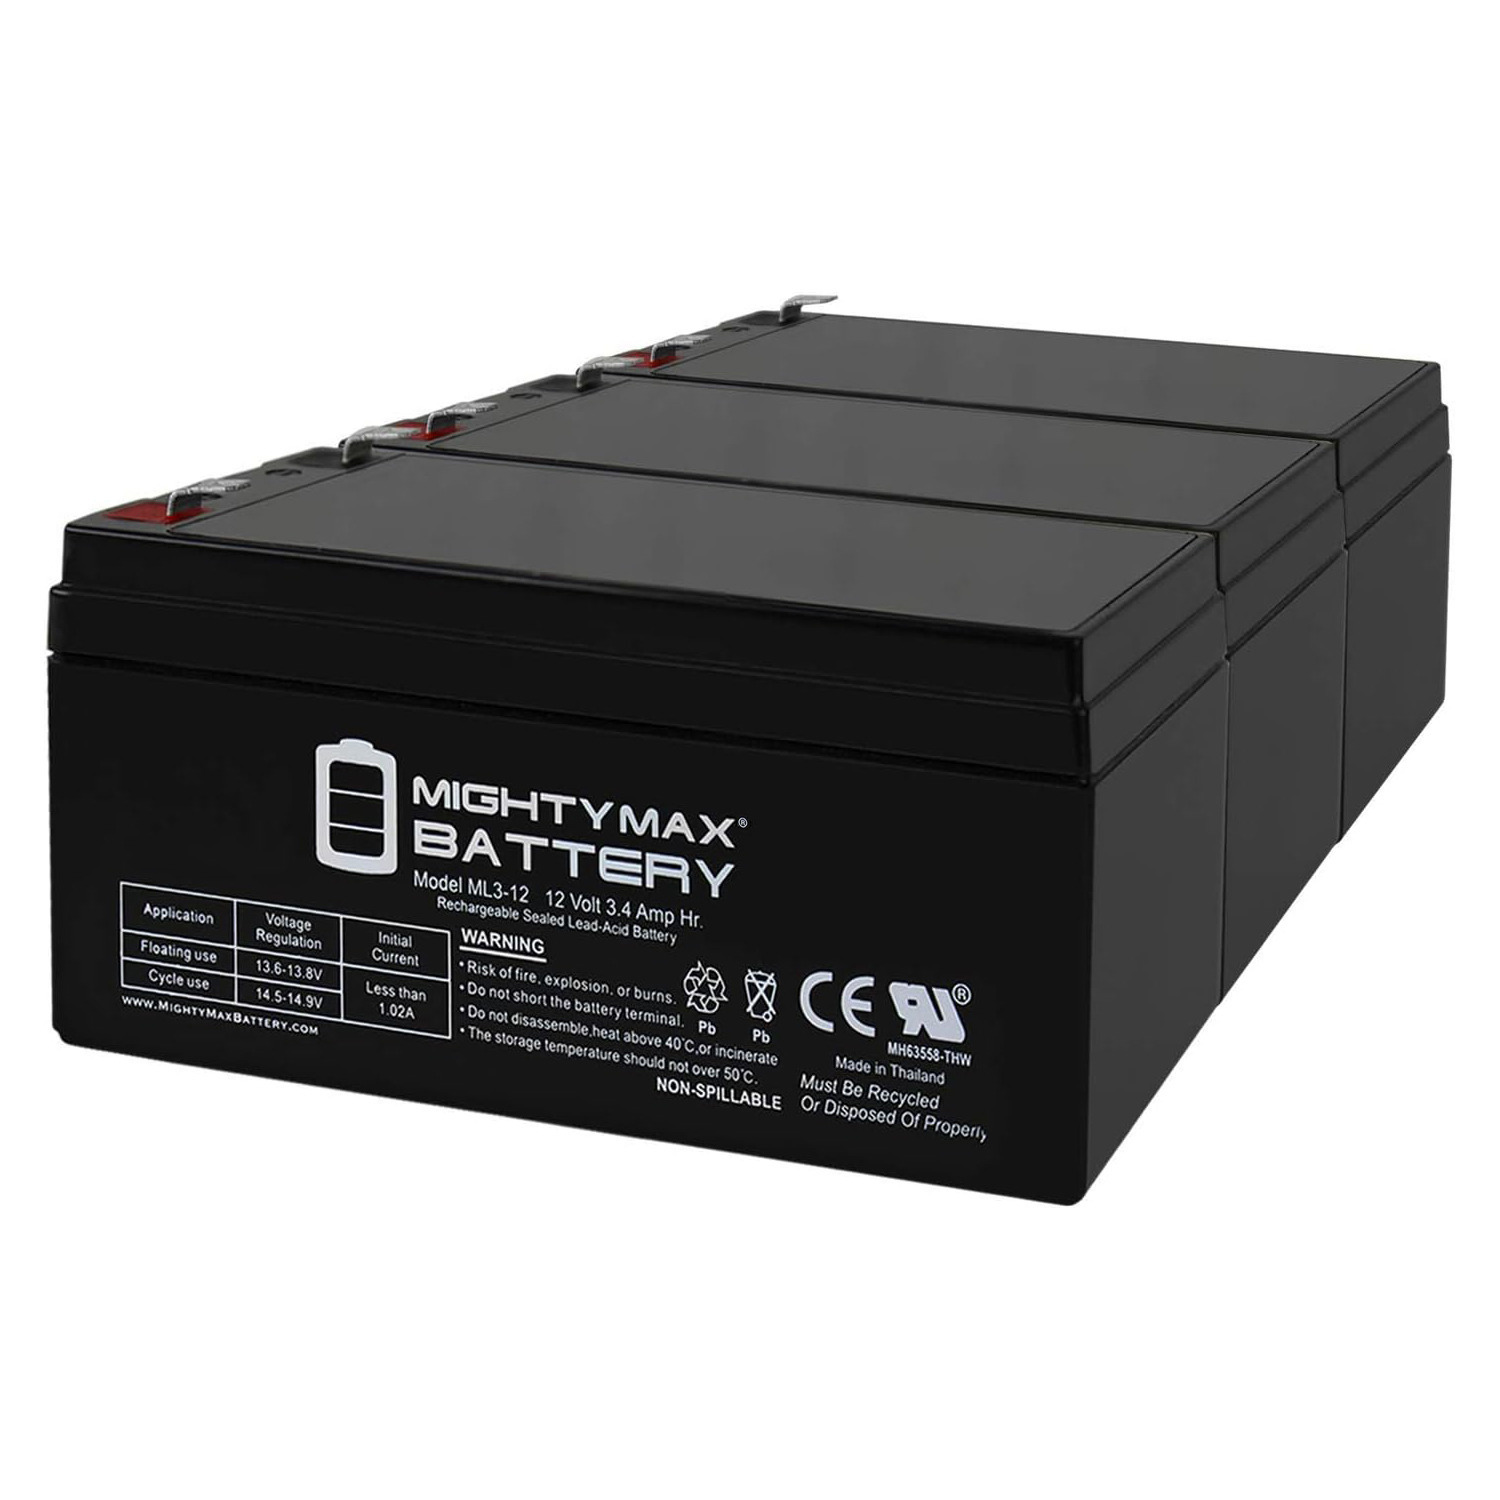 ML3-12 - 12V 3AH SLA Battery Replaces ES3-12 PW1203 - 3 Pack